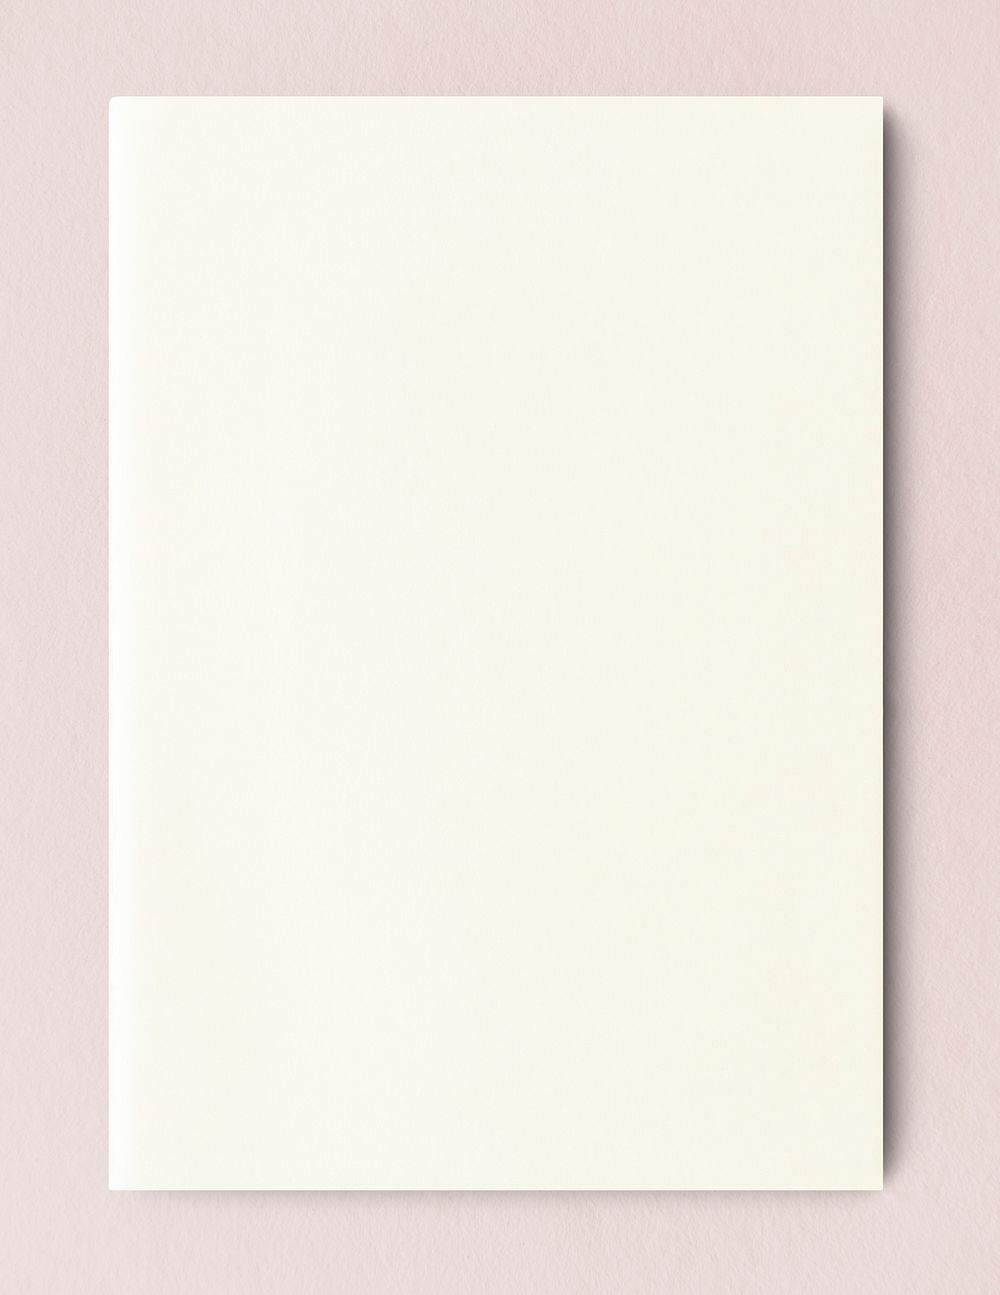 Blank white book cover mockup